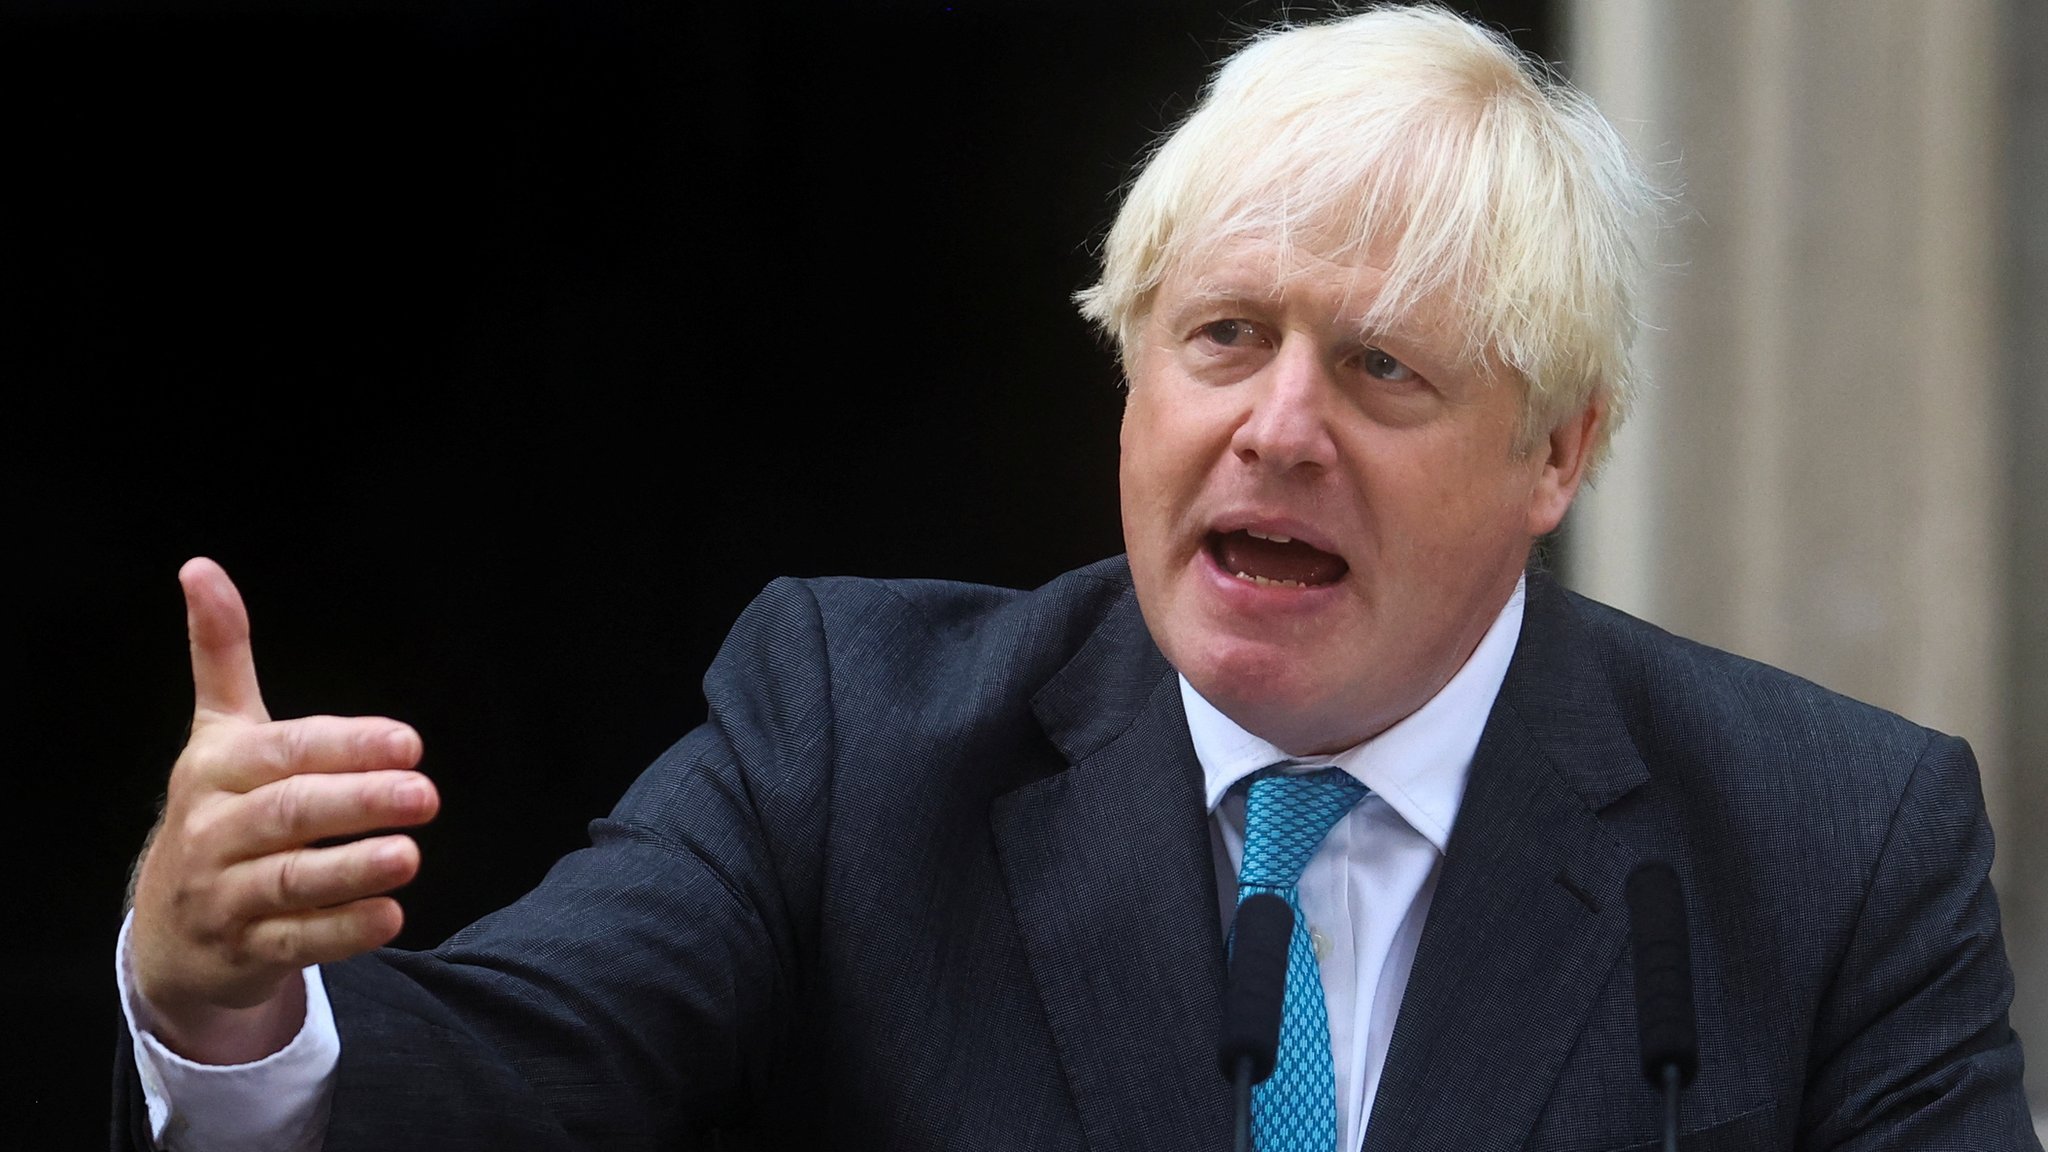 We cannot go wobbly on climate, says Boris Johnson